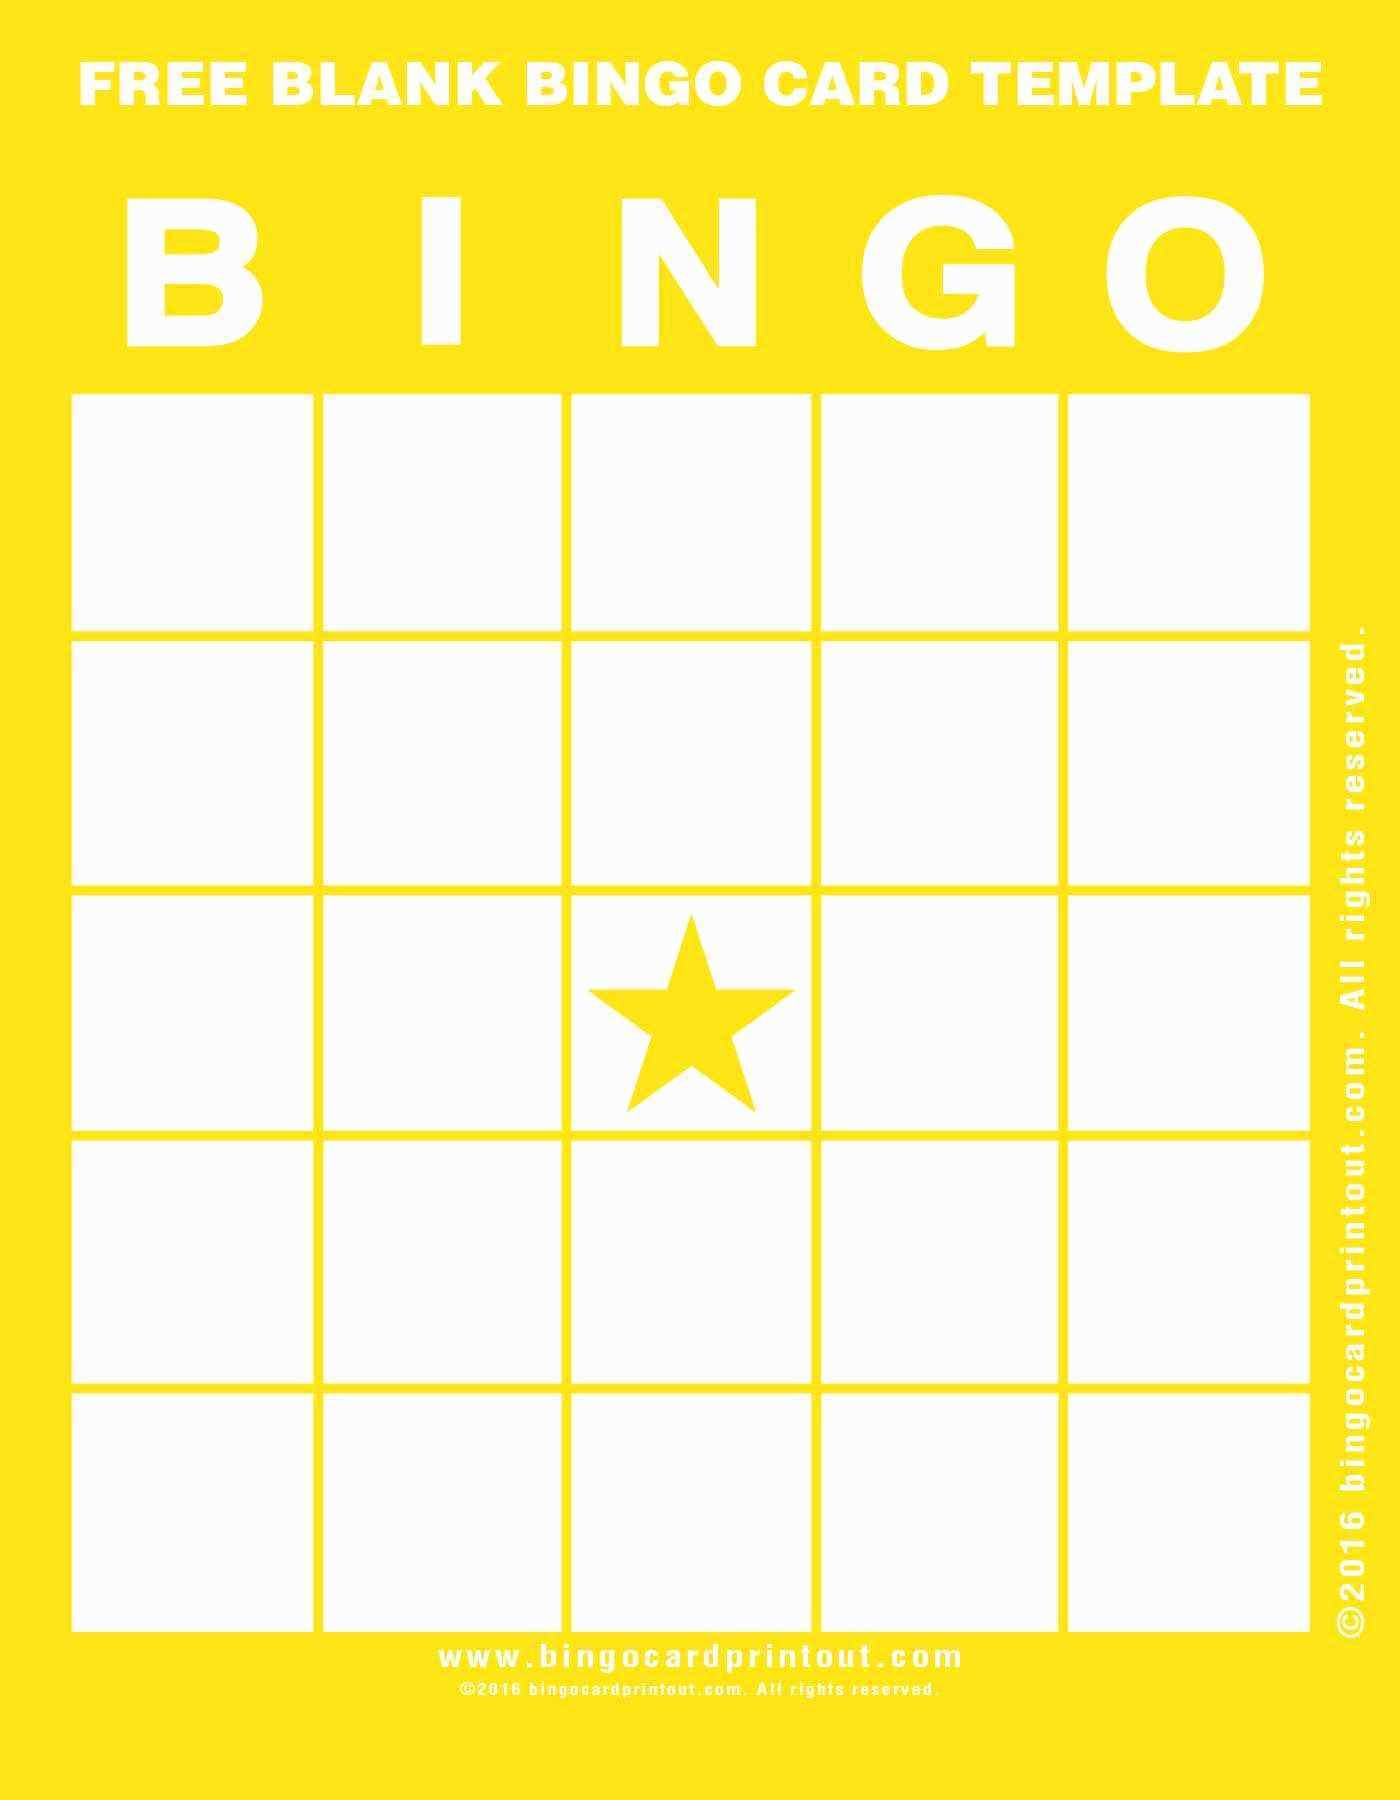 22 Online Bingo Card Template 4X4 PSD File For Bingo Card 